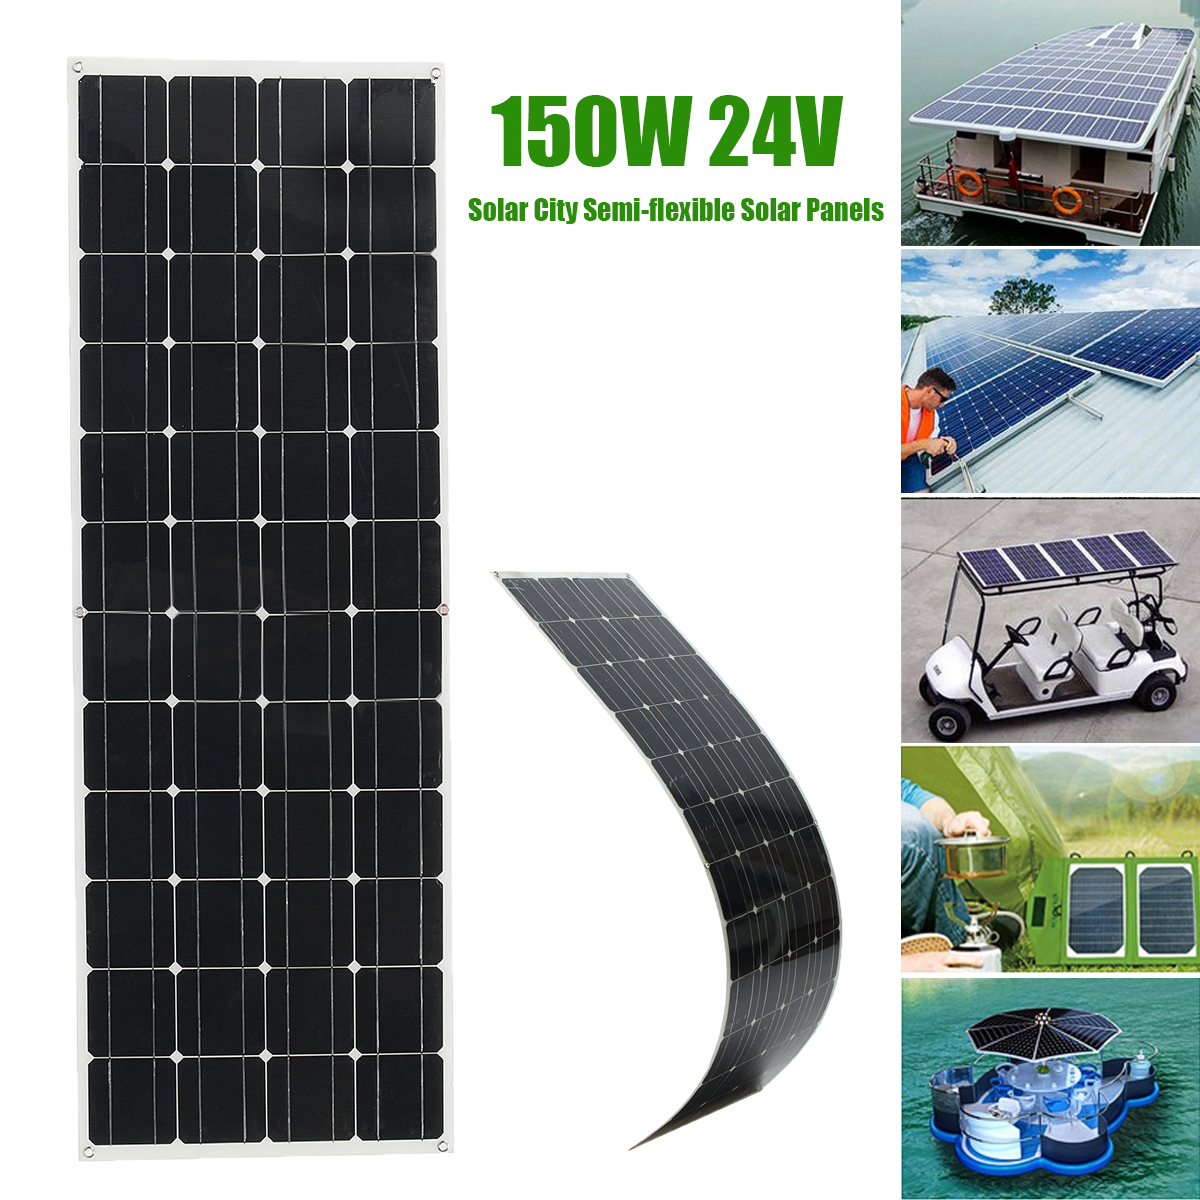 Elfeland® EL-06 150W 24V Semi Flexible Solar Panel + 1.5m Cable For Home RV Boat 51